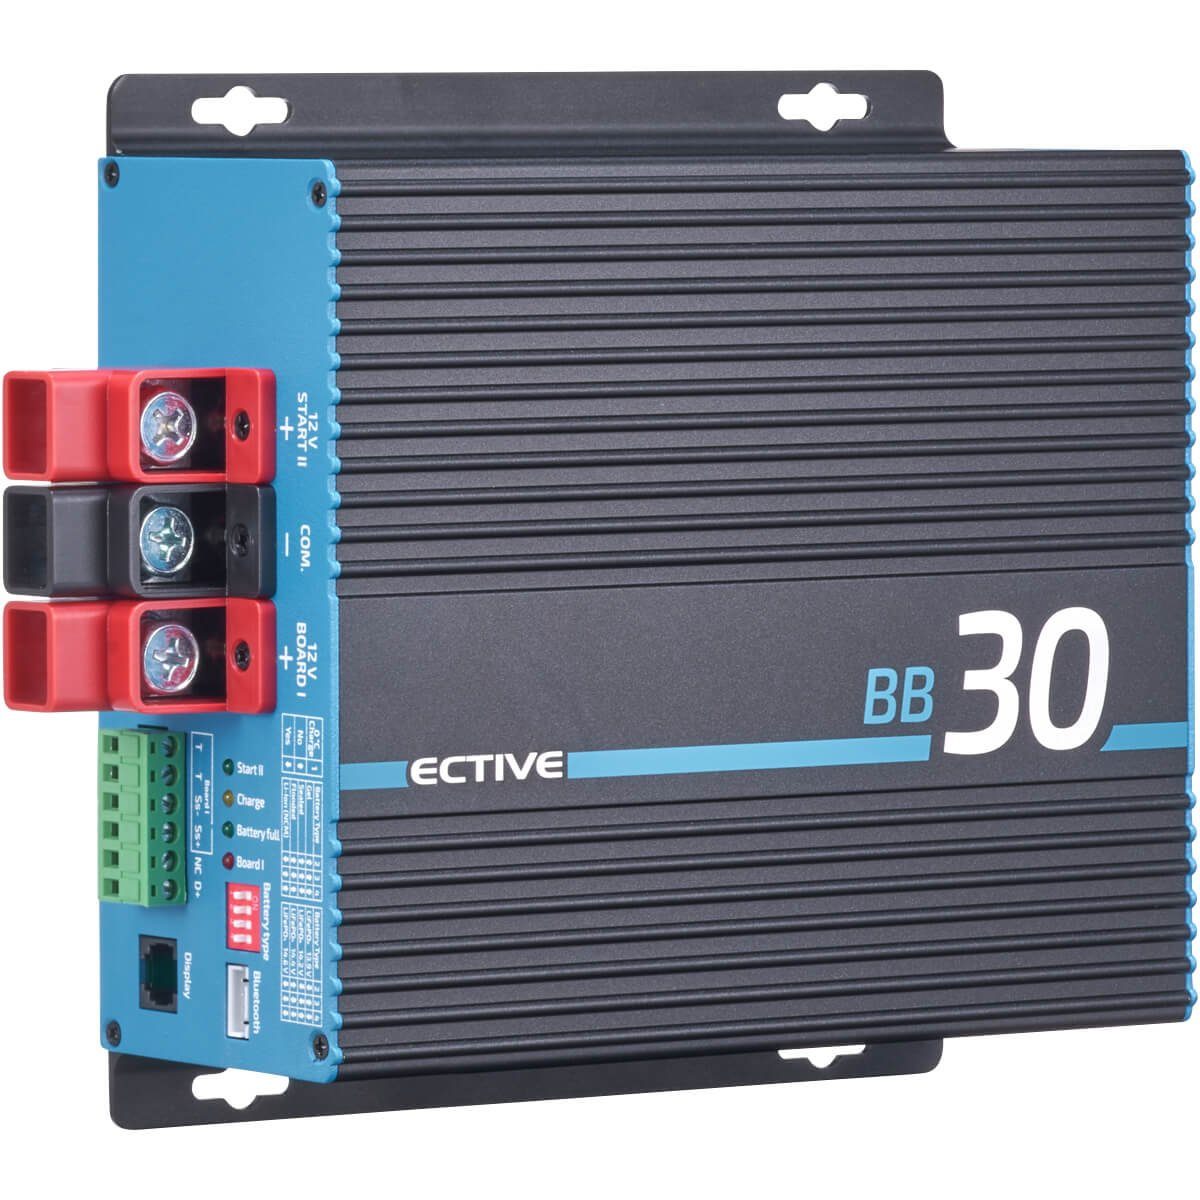 ECTIVE ECTIVE BB30 Ladebooster 12V 30A für Wohnmobil AGM Gel LiFePO4 Batterie Batterie-Ladegerät